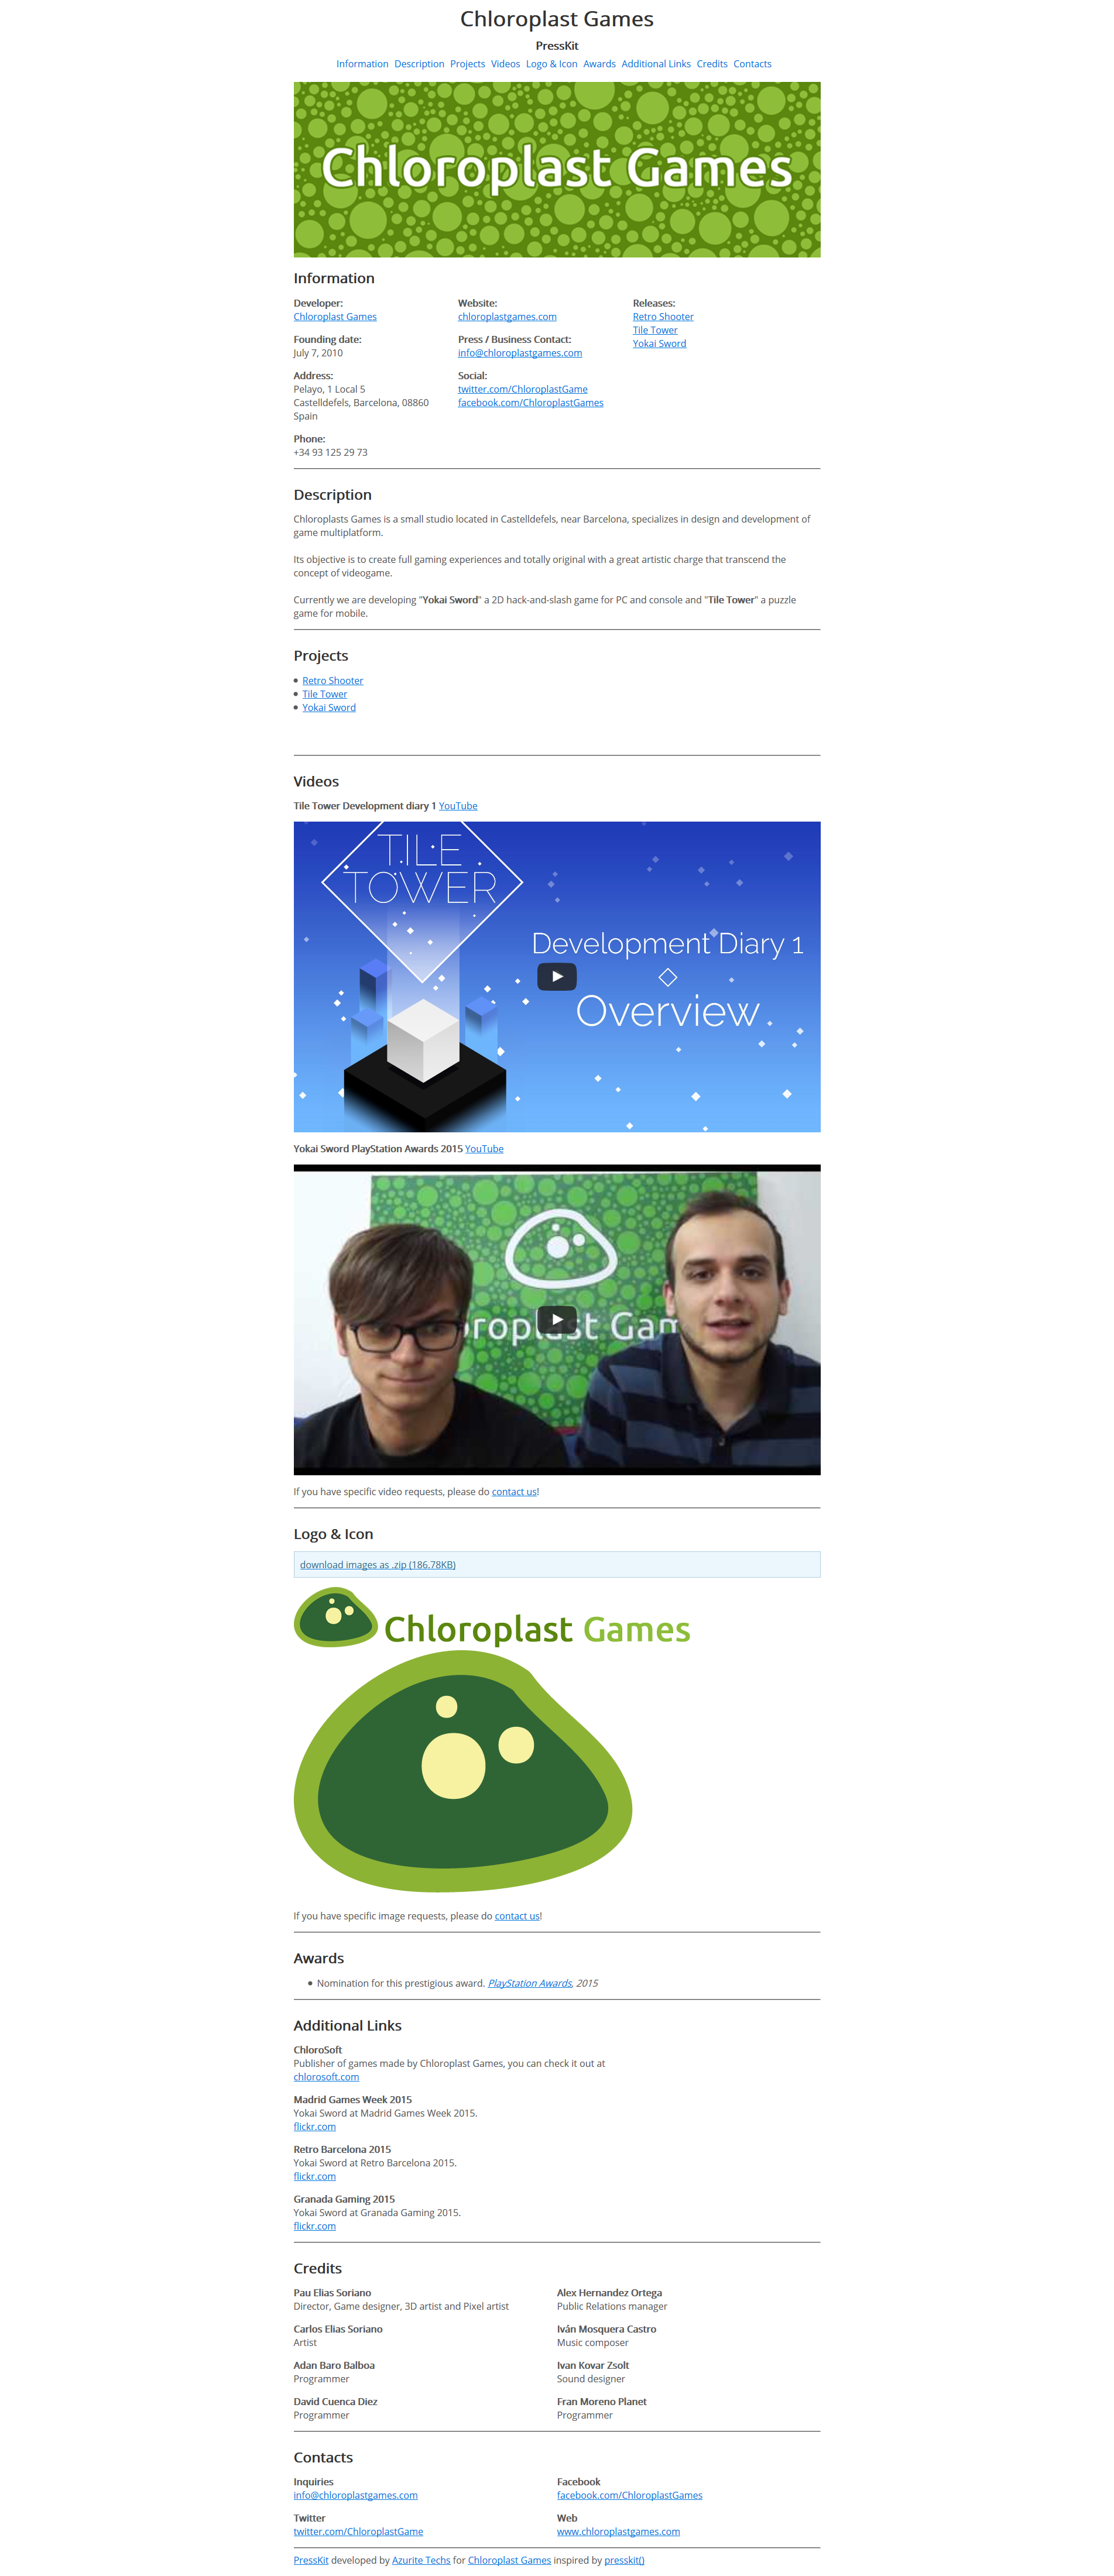 projects/presskit/images/screenshot-chloroplastgames.png